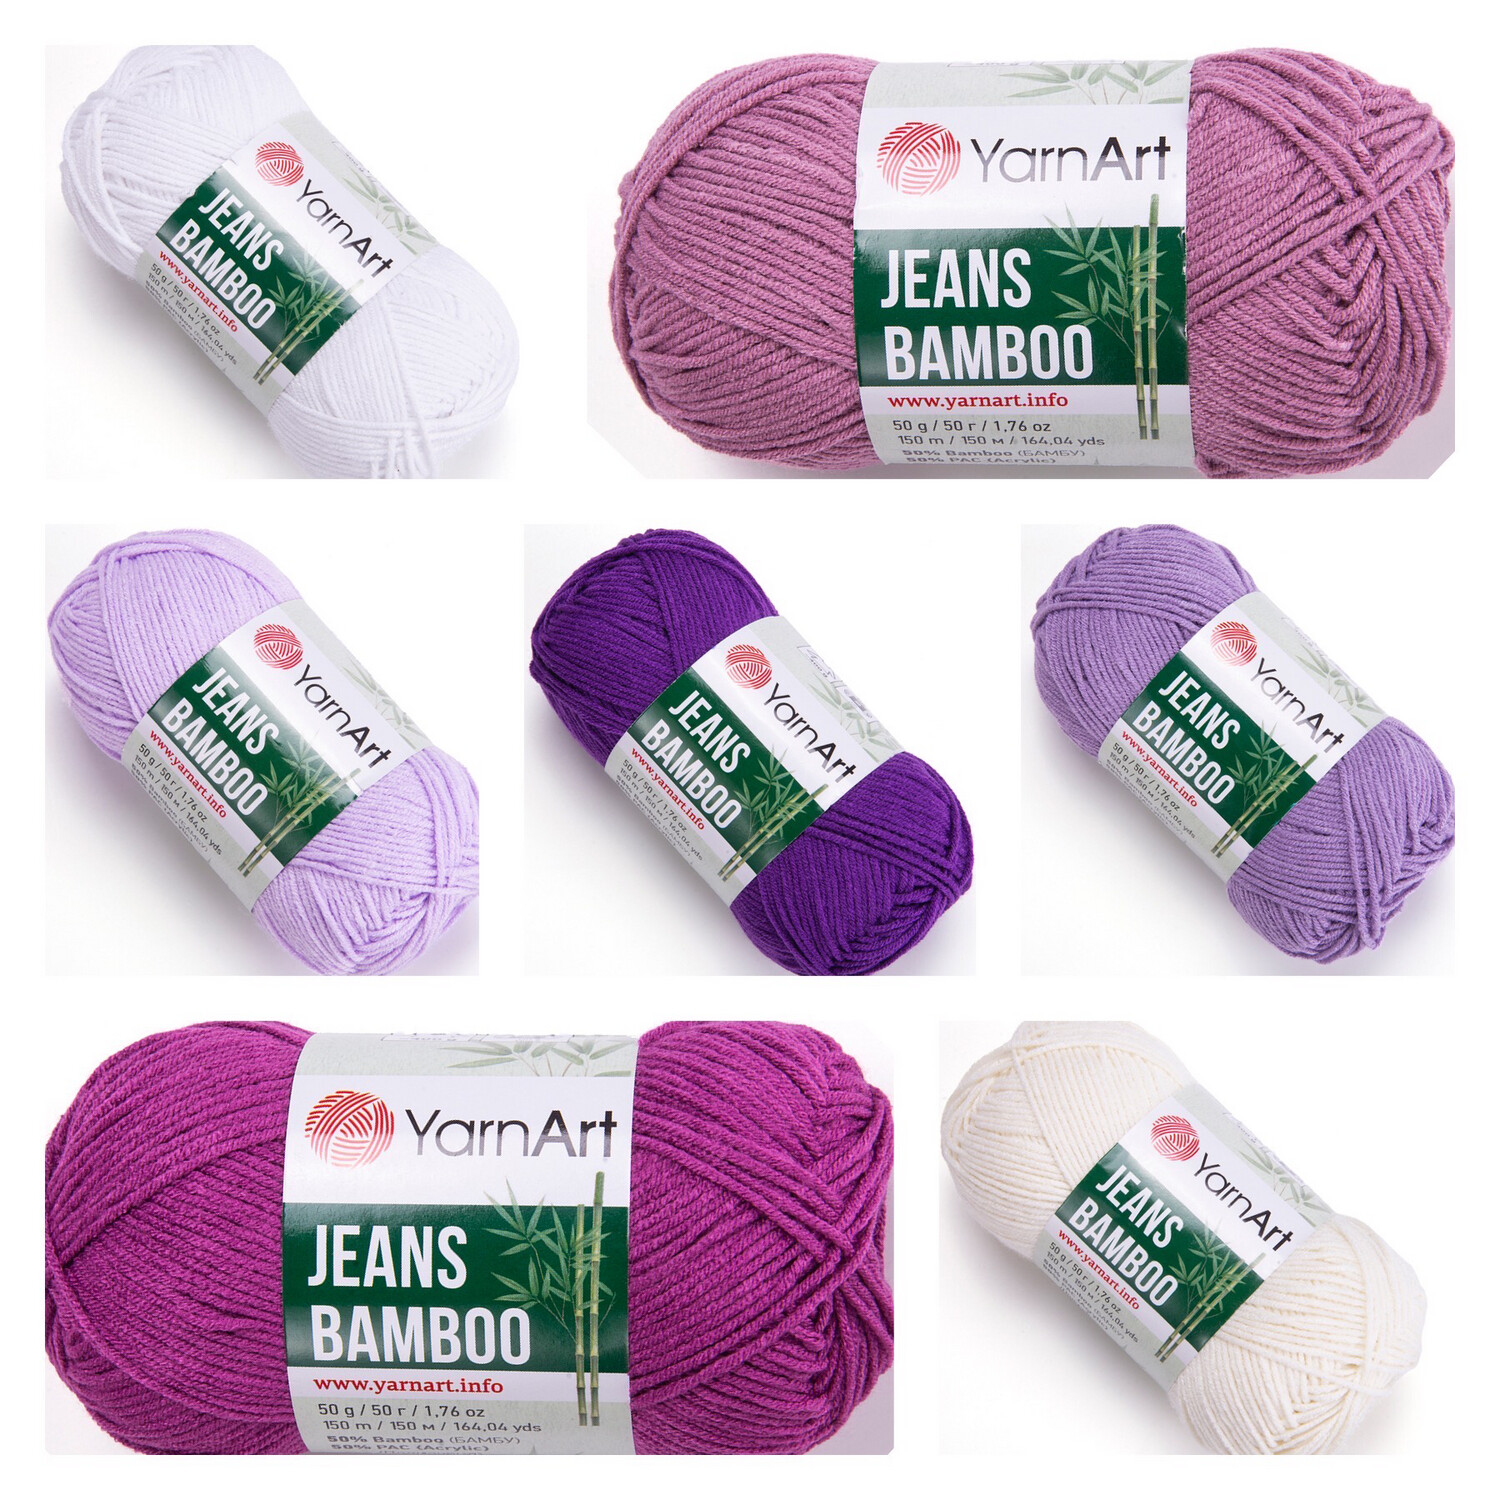 12 x YarnArt Jeans Bamboo Purple Haze Bundle